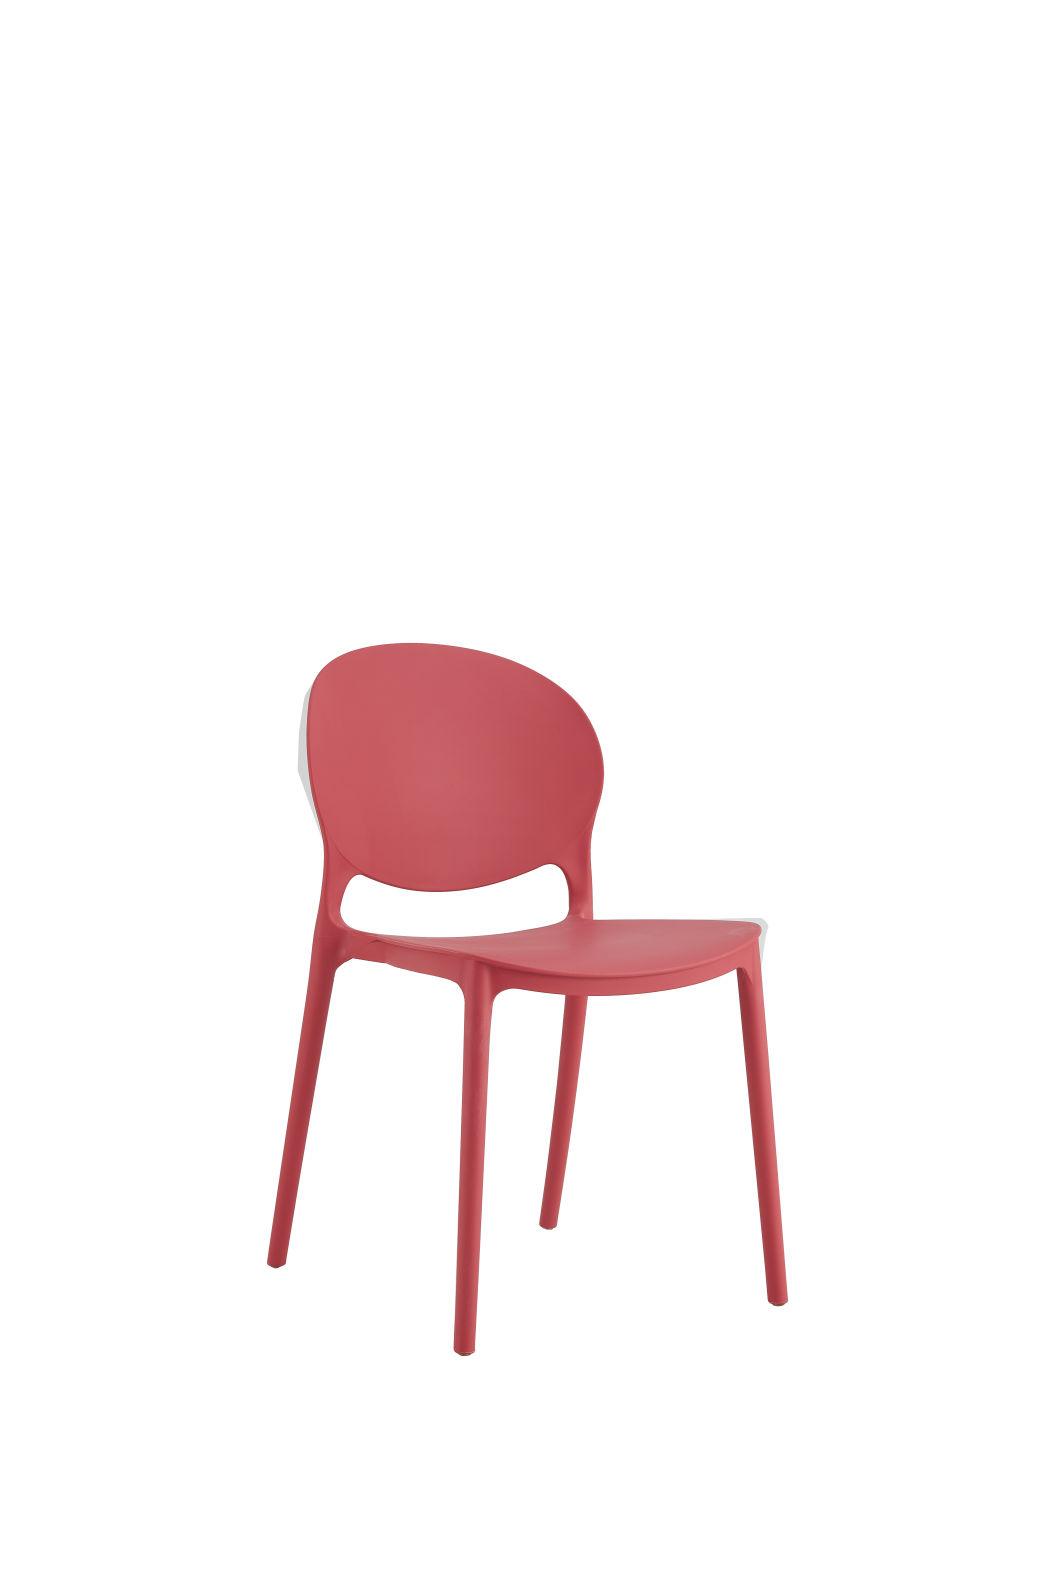 Direct Sale New Design Living Room Furniture Ergonomics Stackable Bar Restaurant Dining Plastic Chair